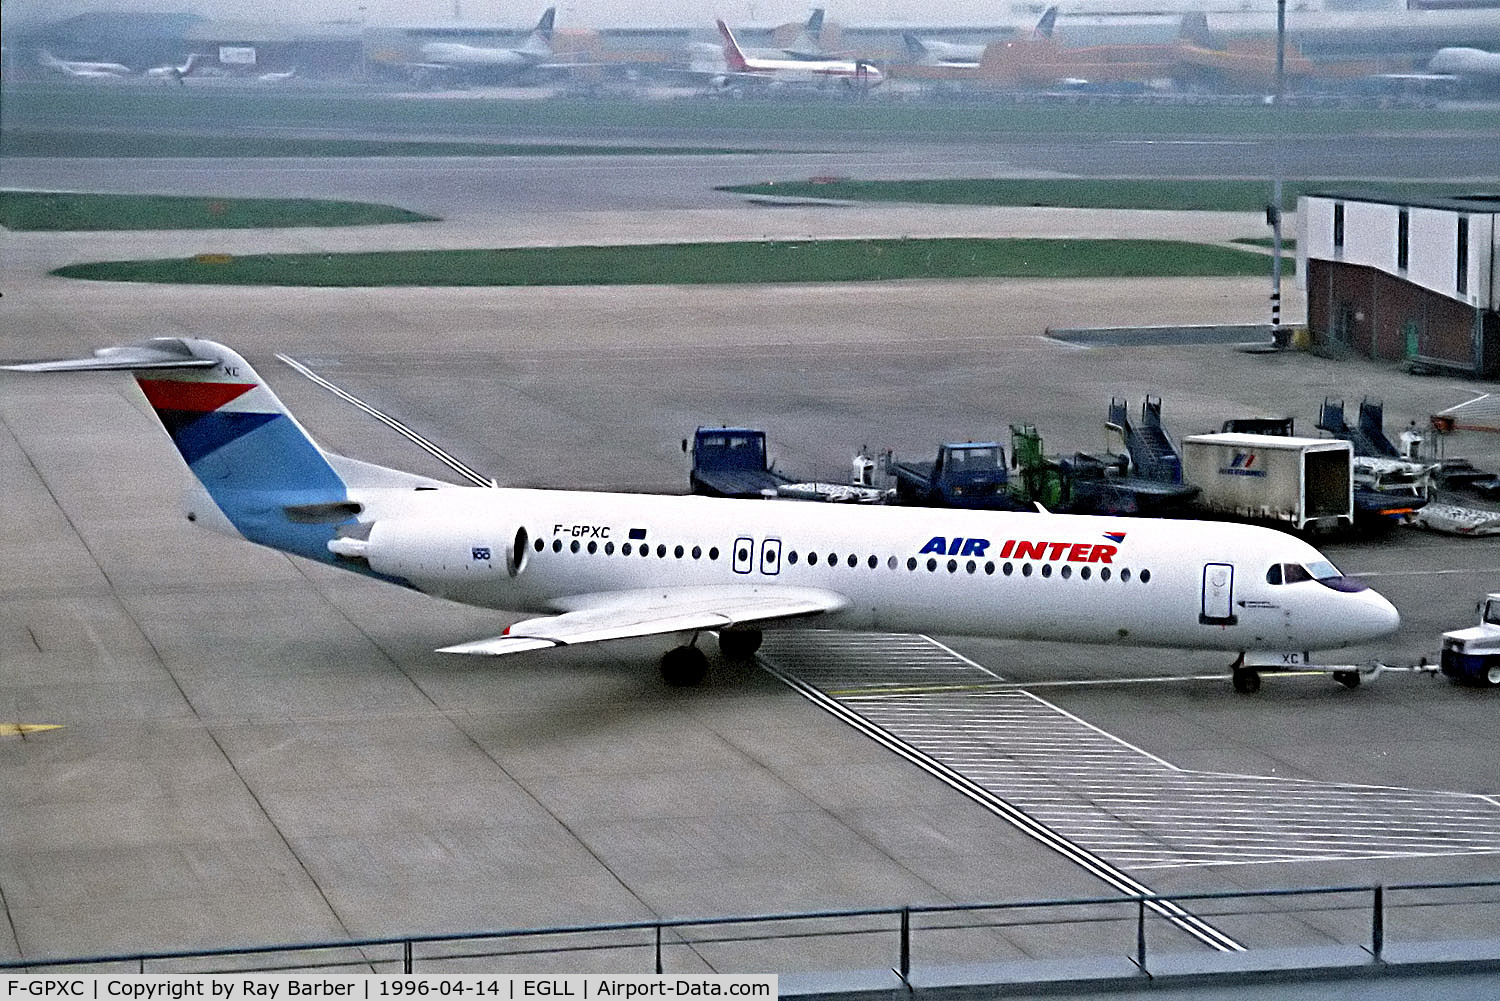 F-GPXC, 1994 Fokker 100 (F-28-0100) C/N 11493, F-GPXC   Fokker F-100 [11493] (Air Inter) Heathrow~G 14/04/1996